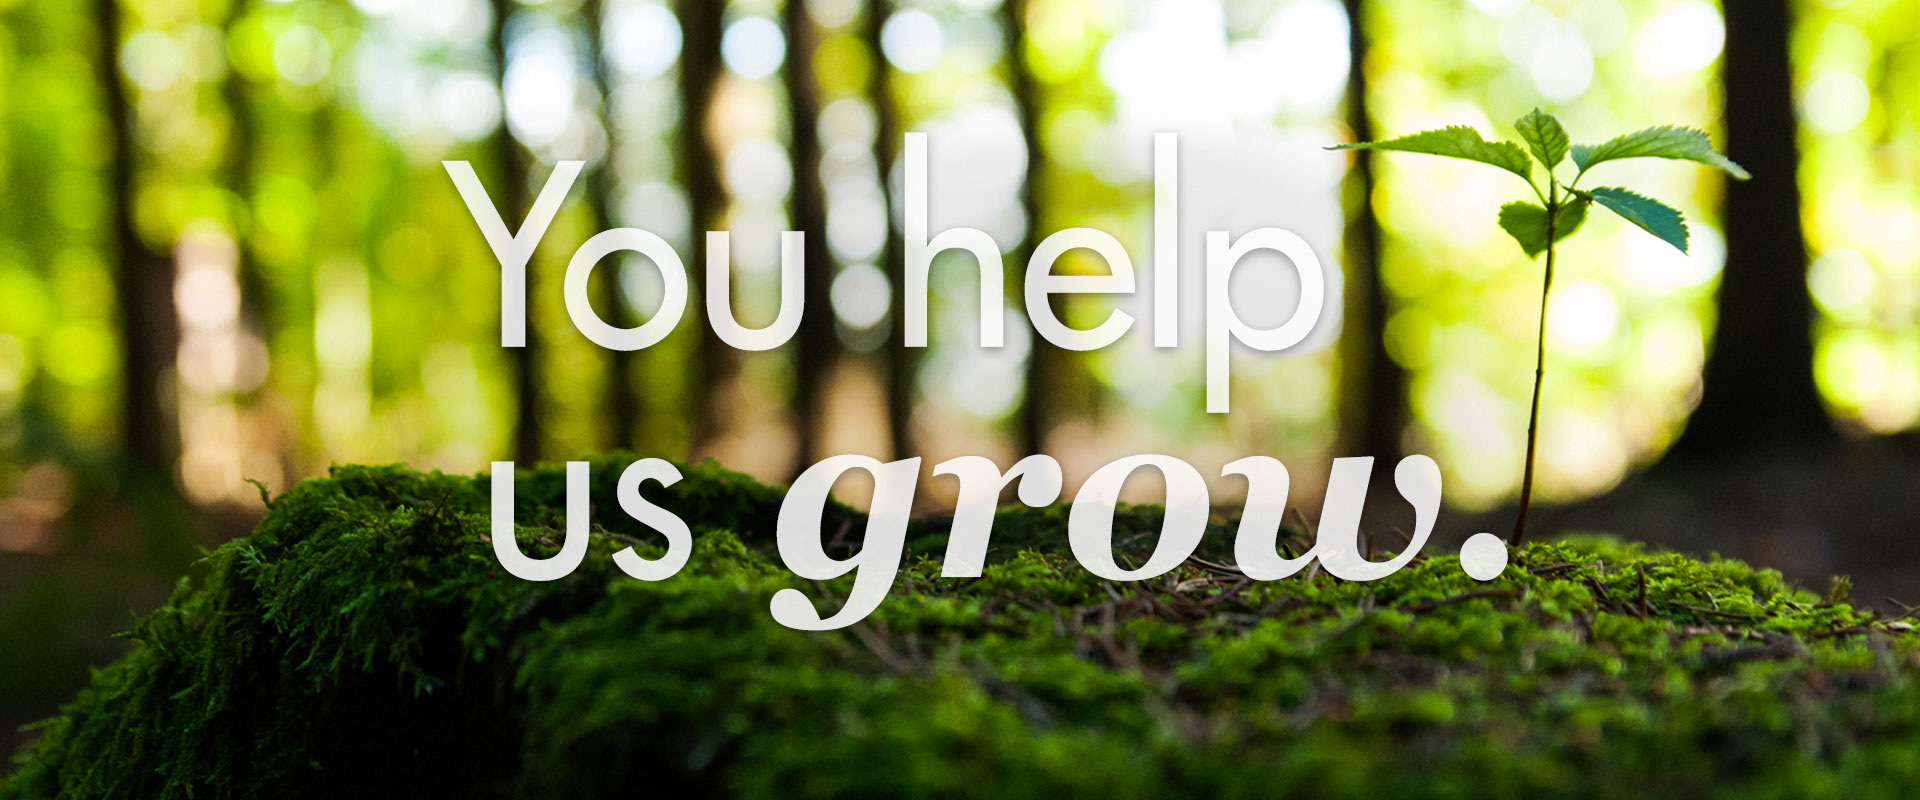 You help us grow.